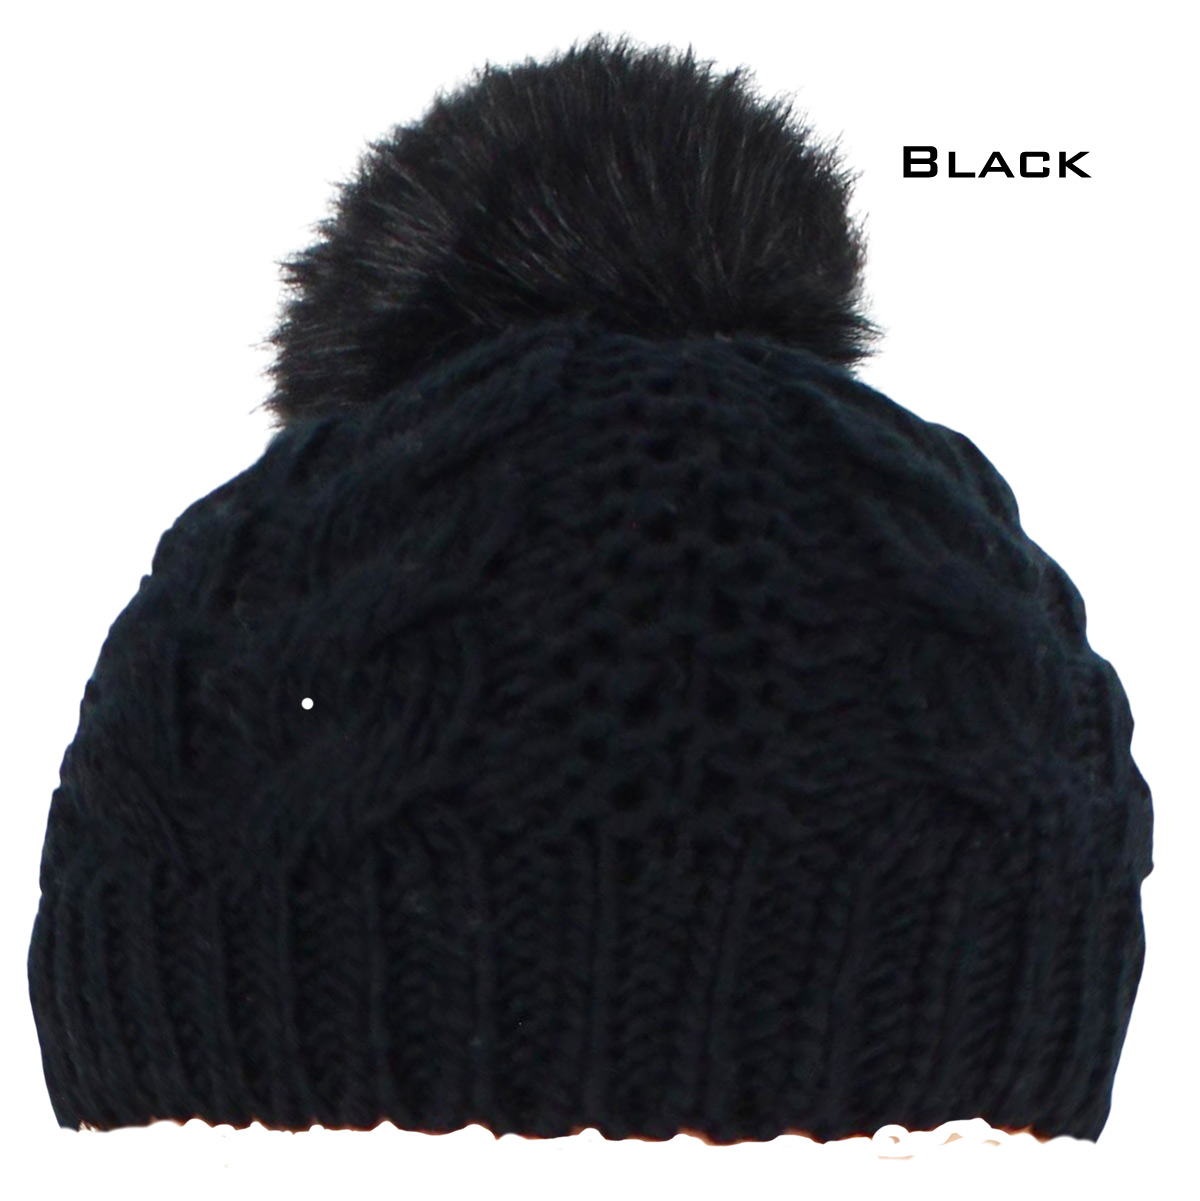 3114 - Winter Knit Hats 10027 DARK GREY/YARN POM POM Knit Winter Hat - One Size Fits Most